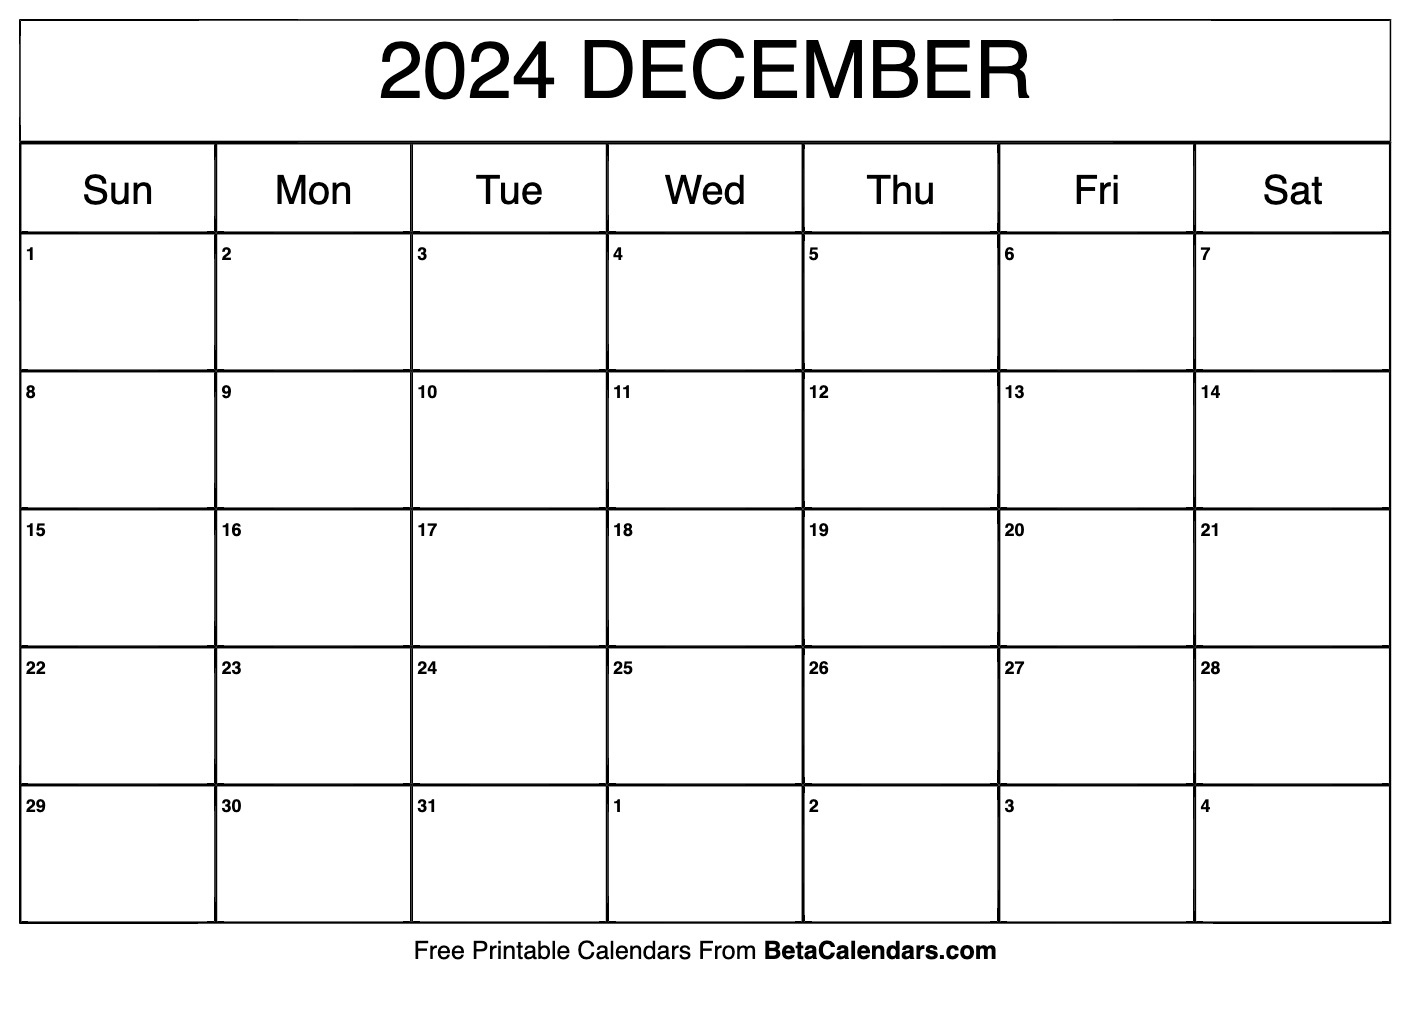 Free Printable December 2024 Calendar regarding Free Printable Calendar 2024 Deember